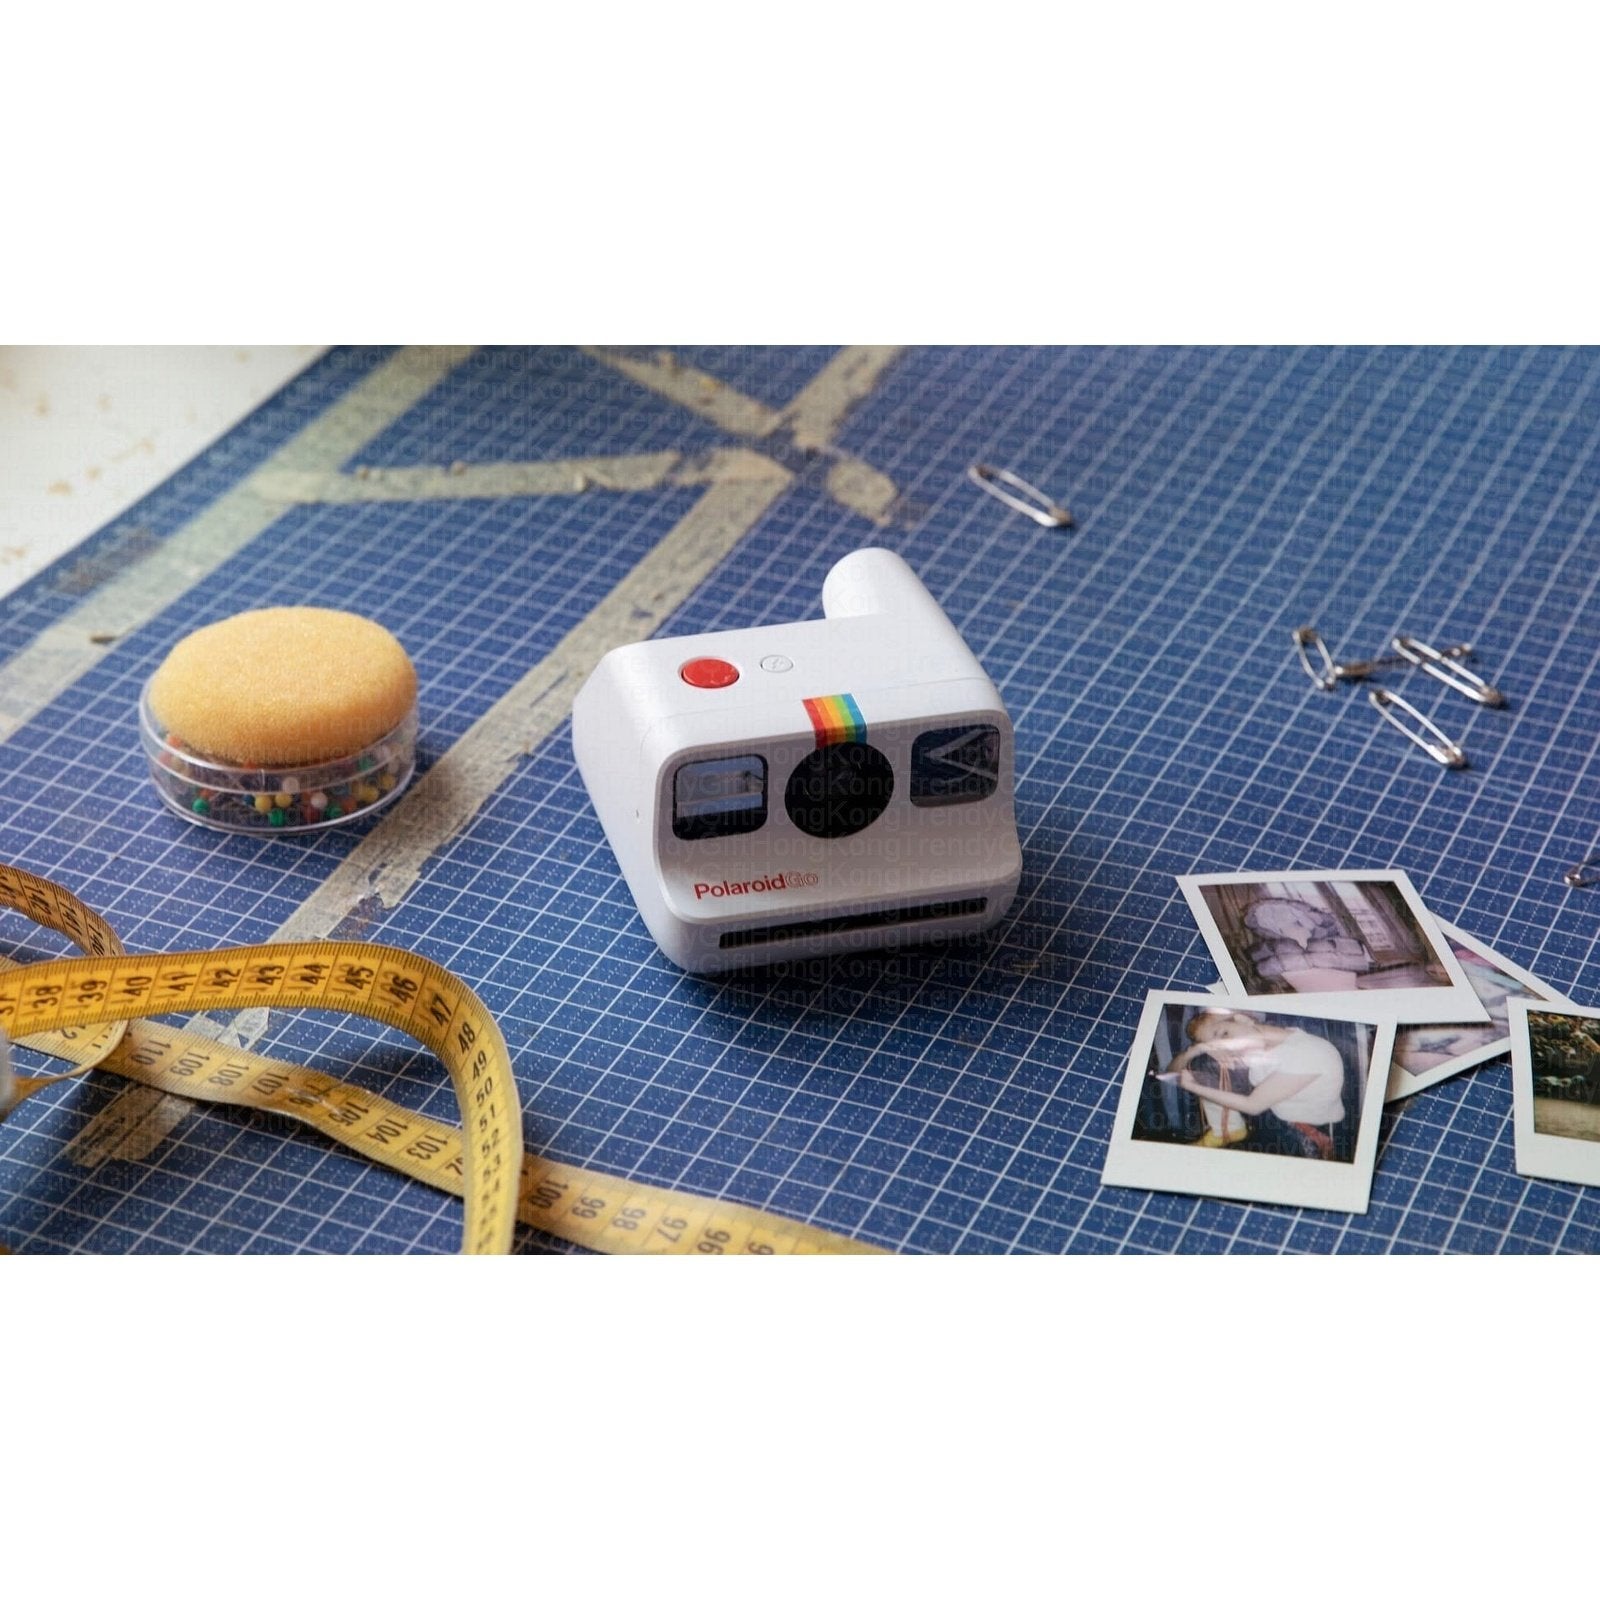 Polaroid Go Instant Mini Camera and Color Go Film 16 Photo Set trendygifthk